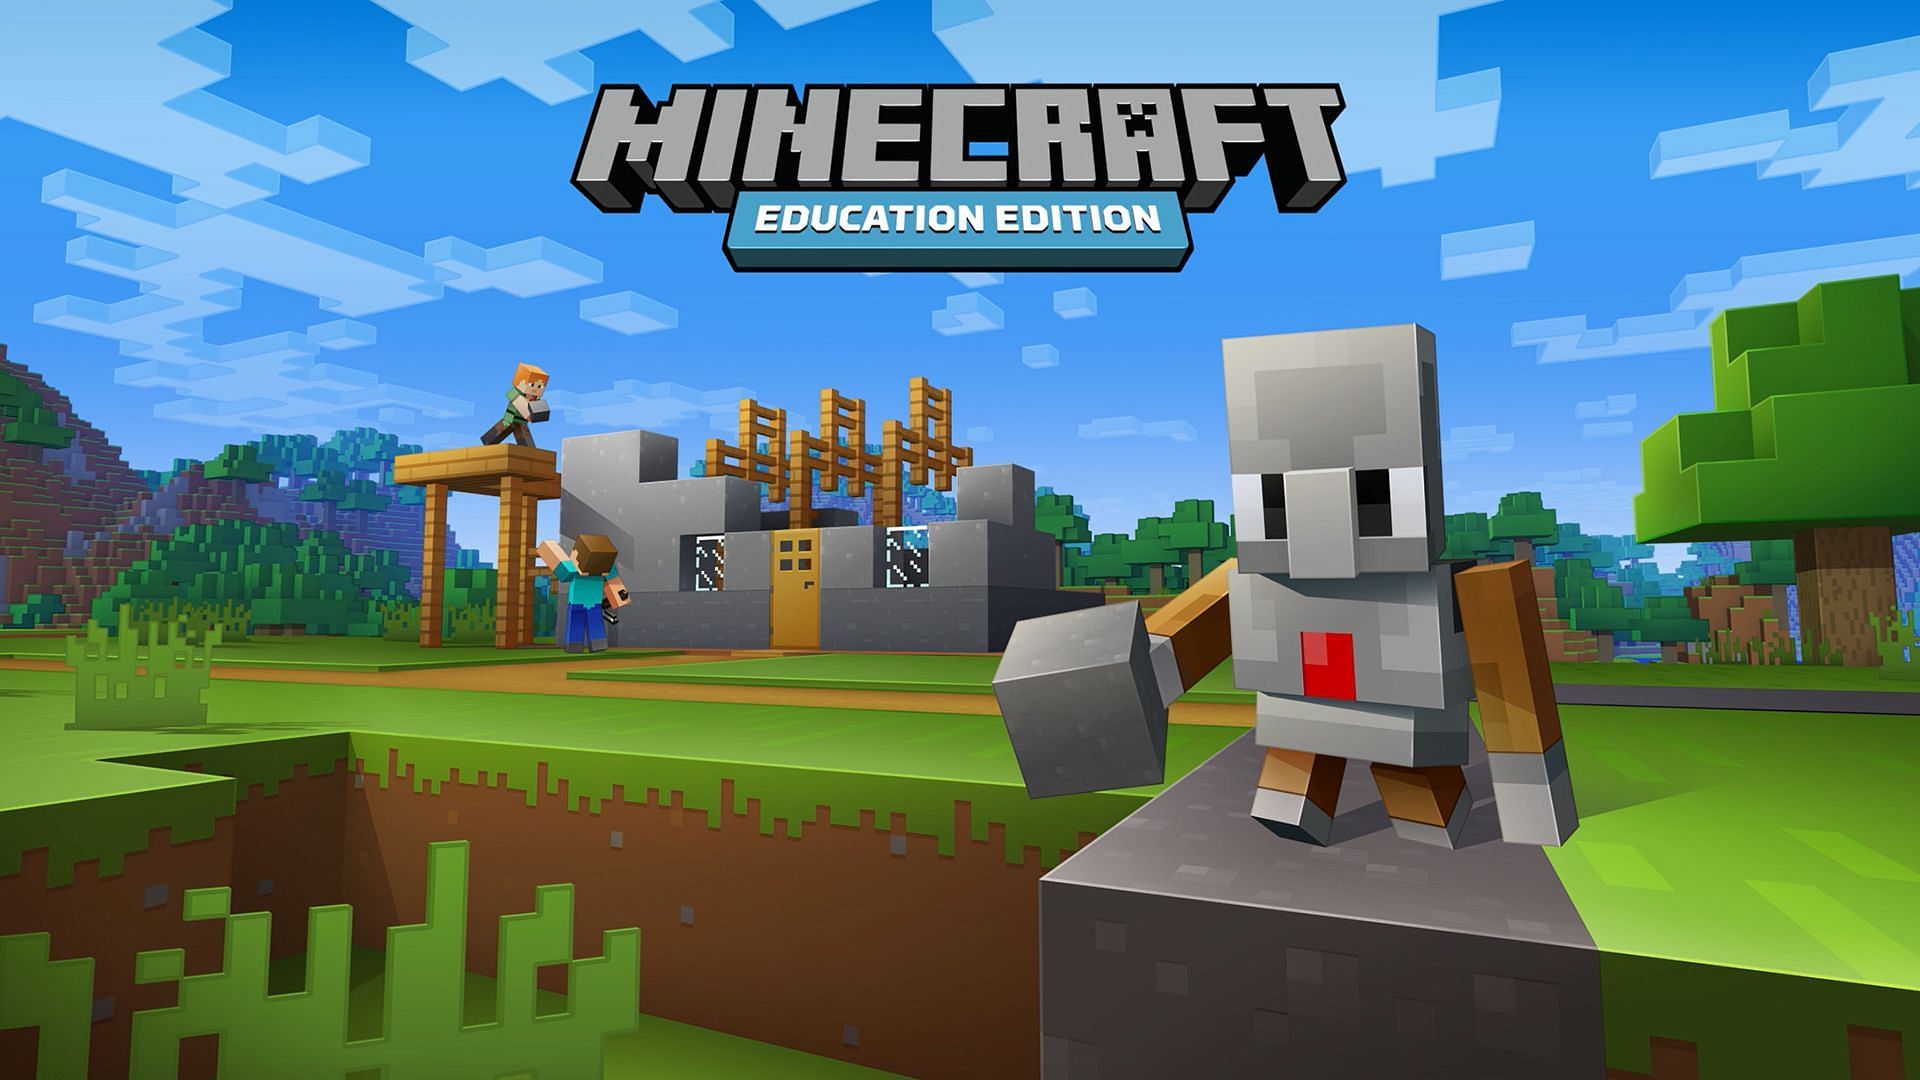 Minecraft Education Edition (Image via Mojang)